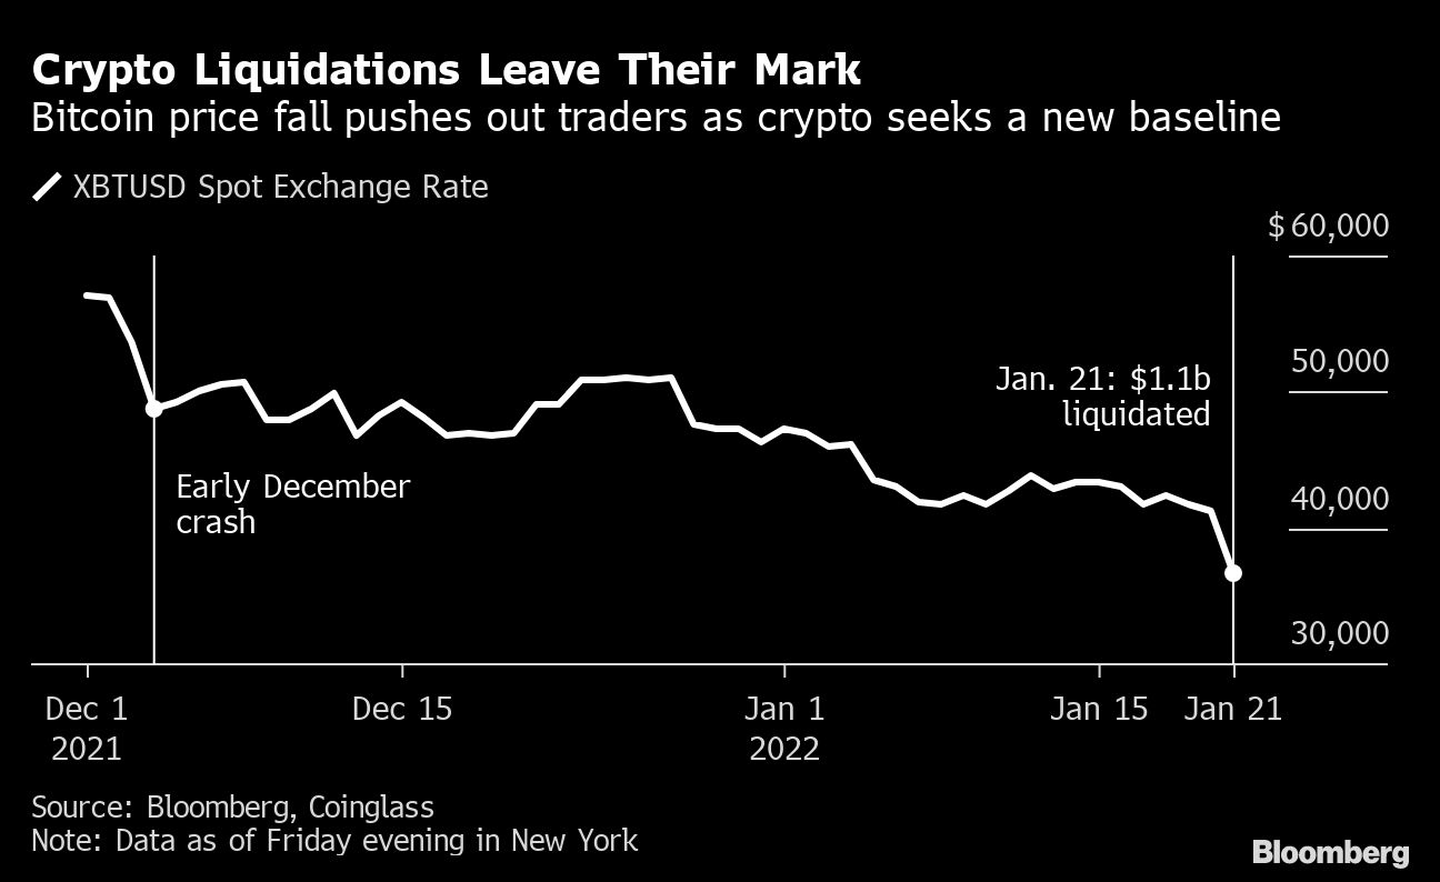 Crypto Liquidations Leave Their Markdfd